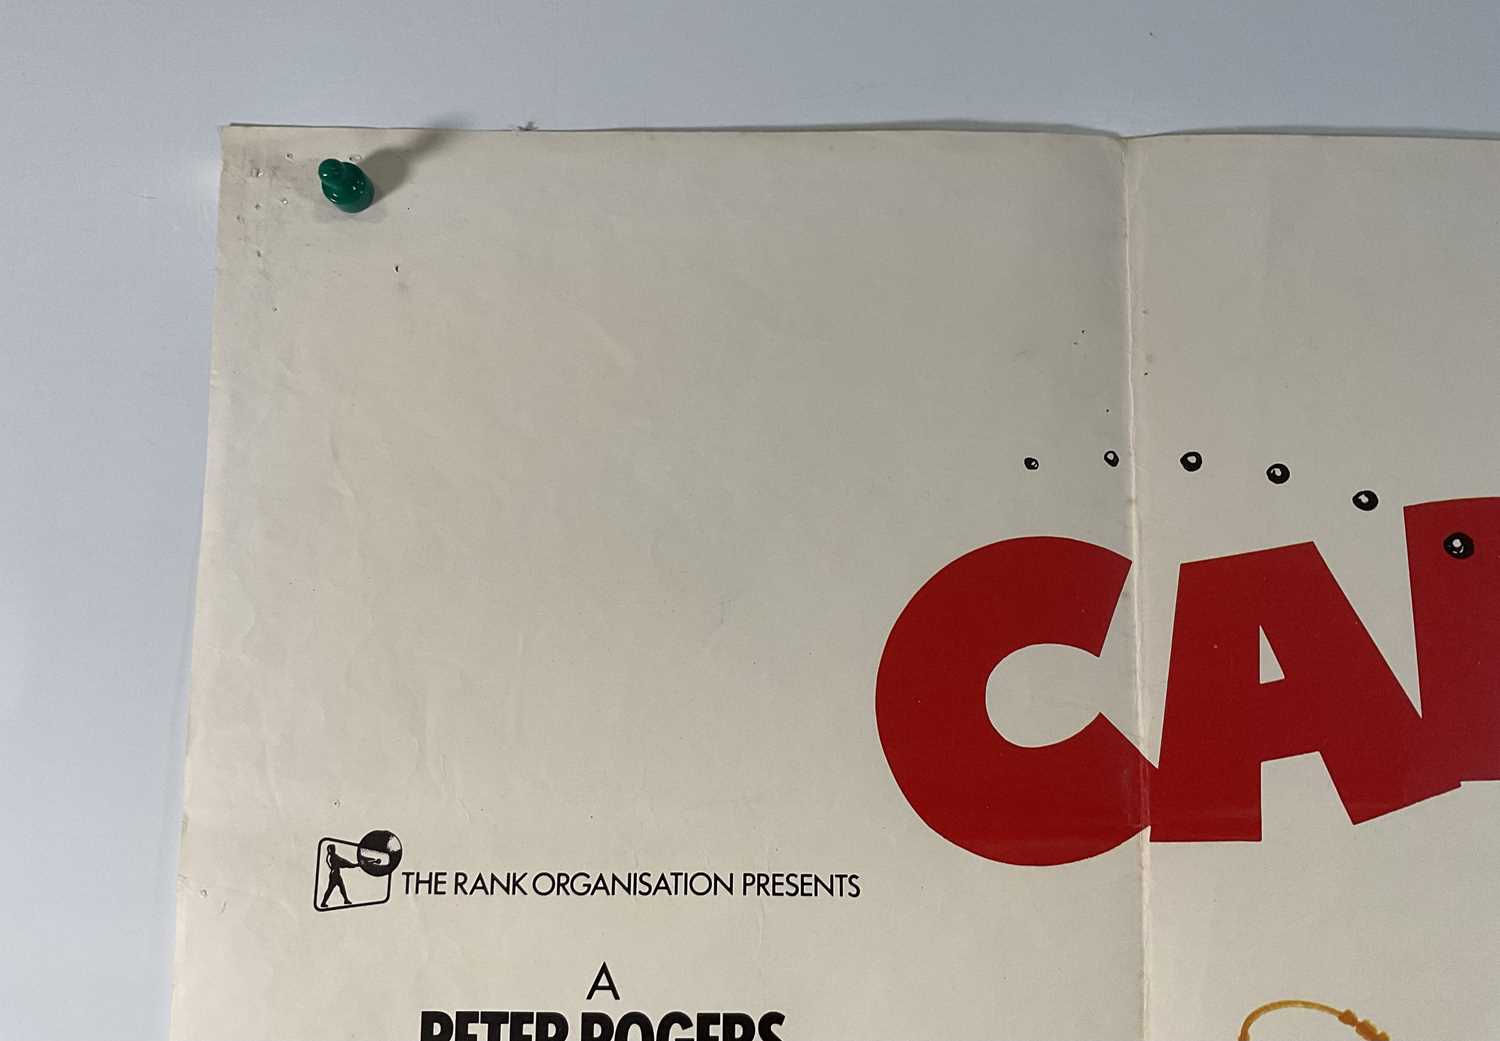 CARRY ON DICK (1973) UK Quad film poster, artwork by Arnaldo Putzu, folded. - Image 3 of 6